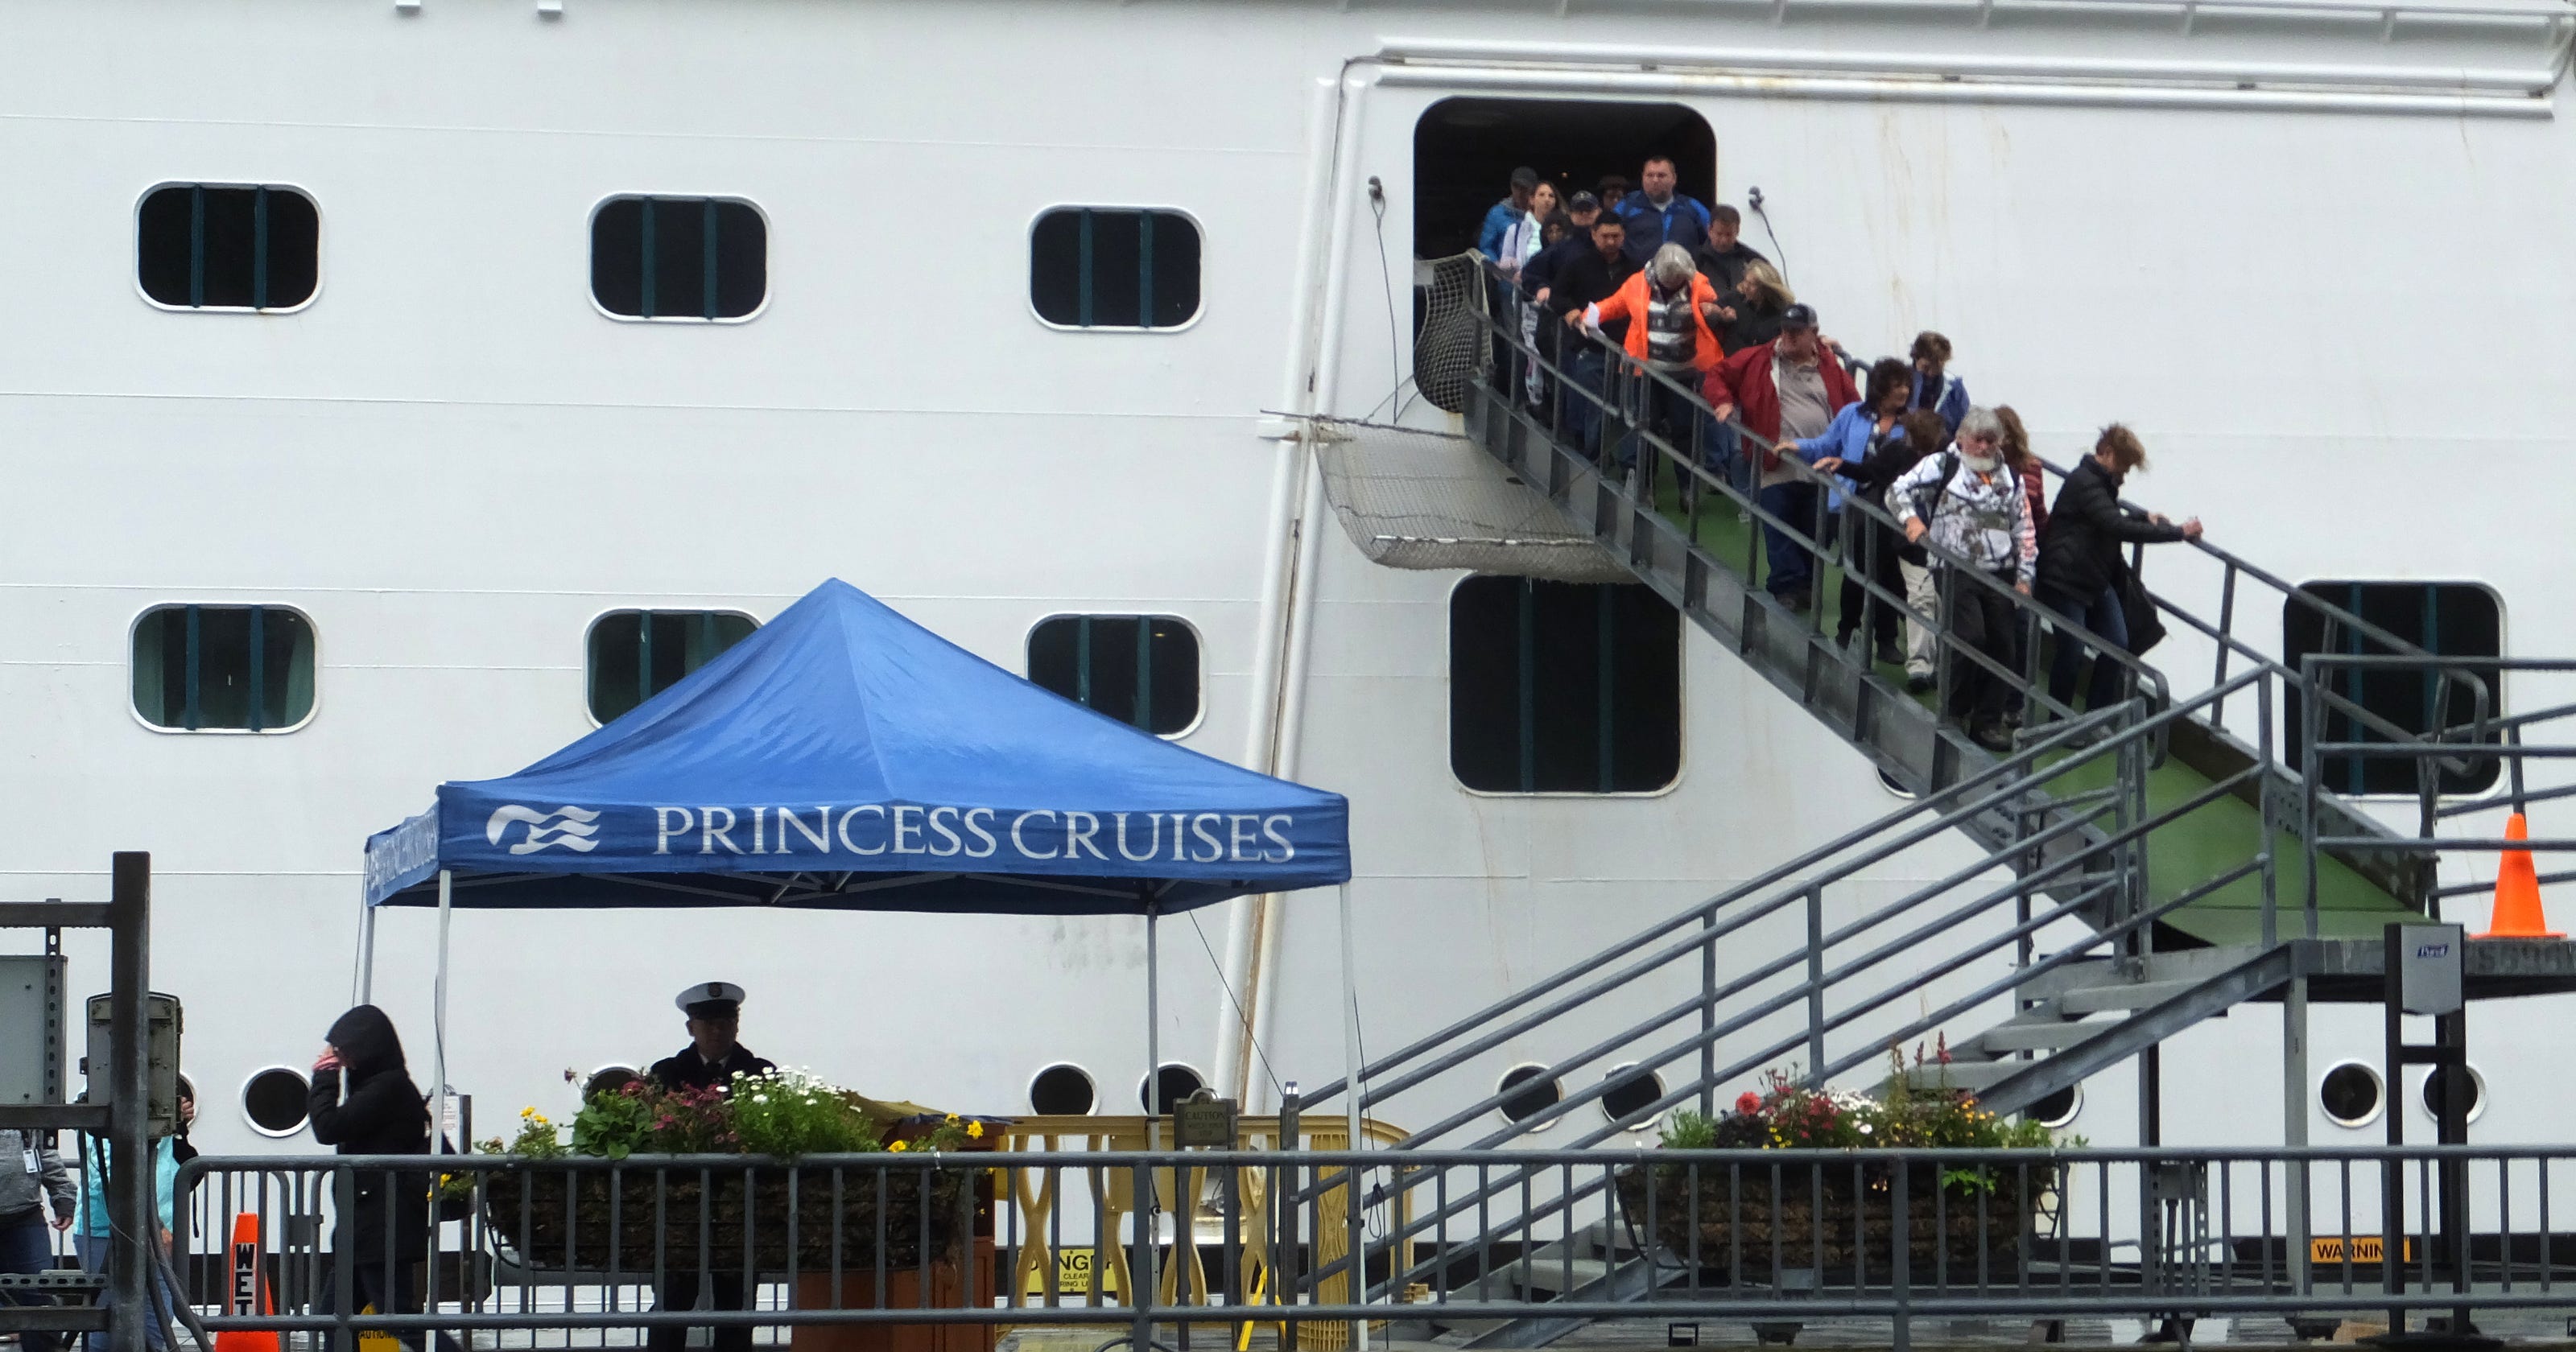 Fbi Arrests Husband In Cruise Ship Death Of Wife 0888